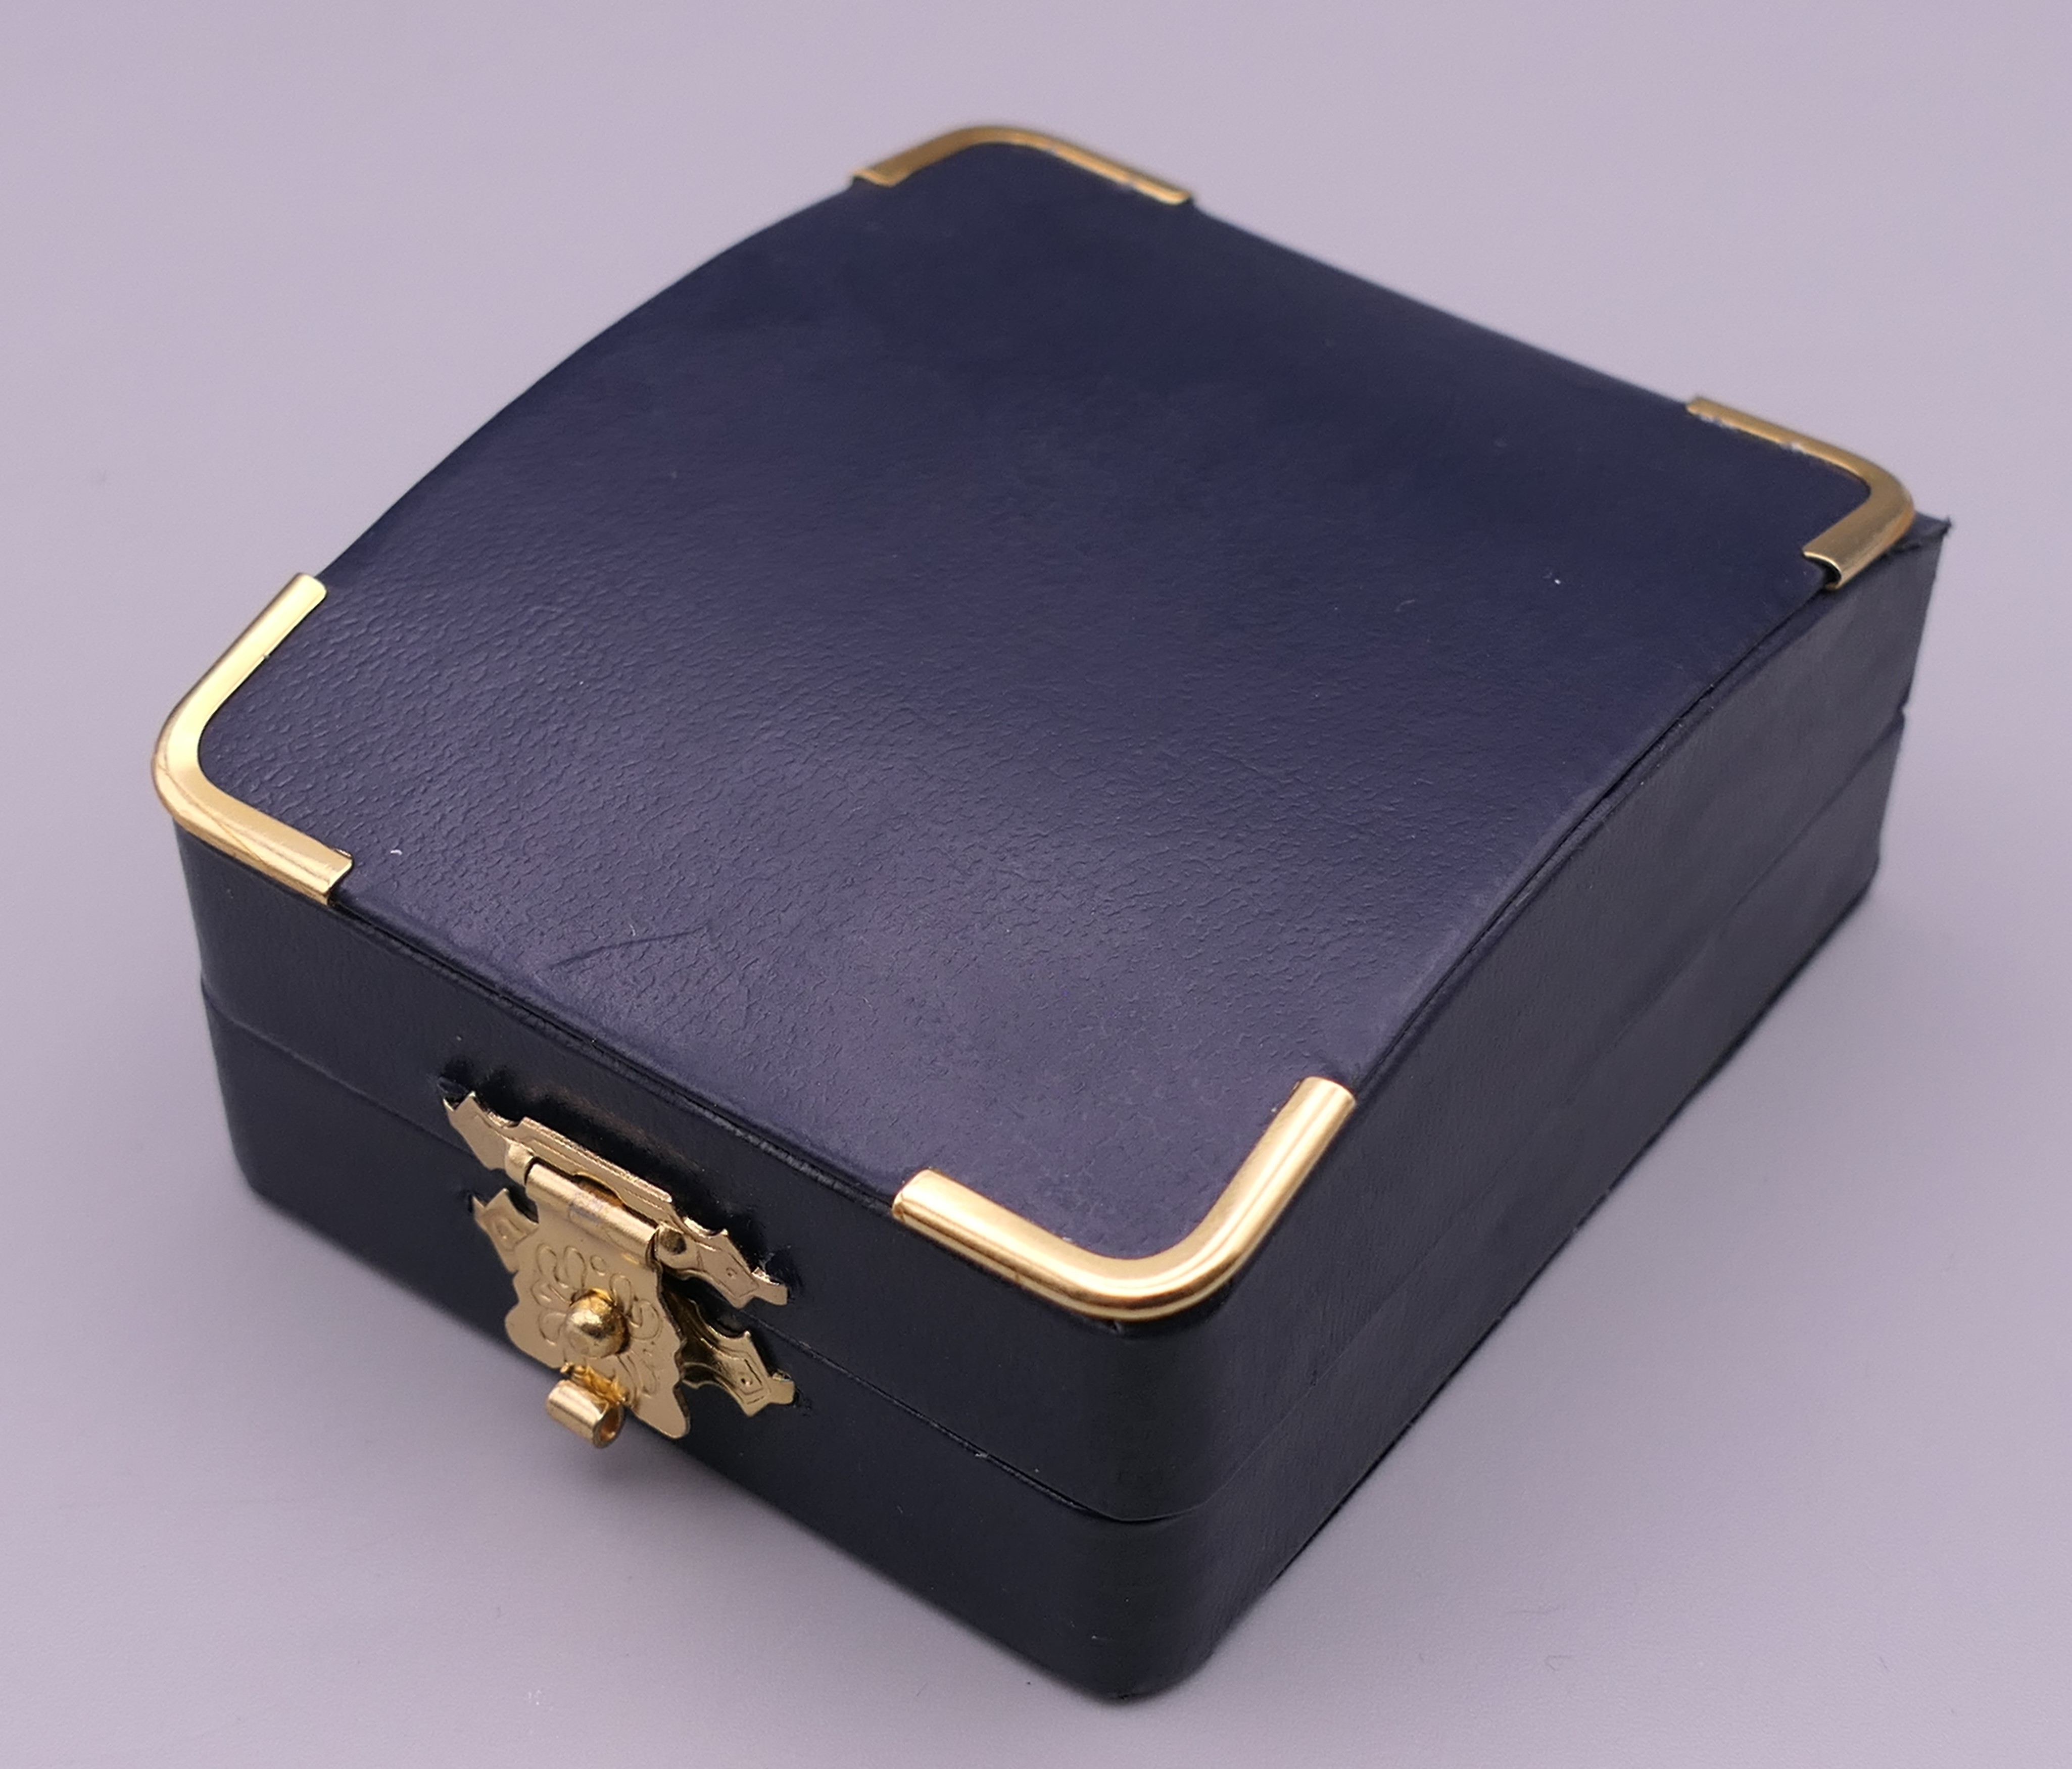 A pair of Emporio Armani cufflinks, boxed. 2 cm diameter. - Image 5 of 5